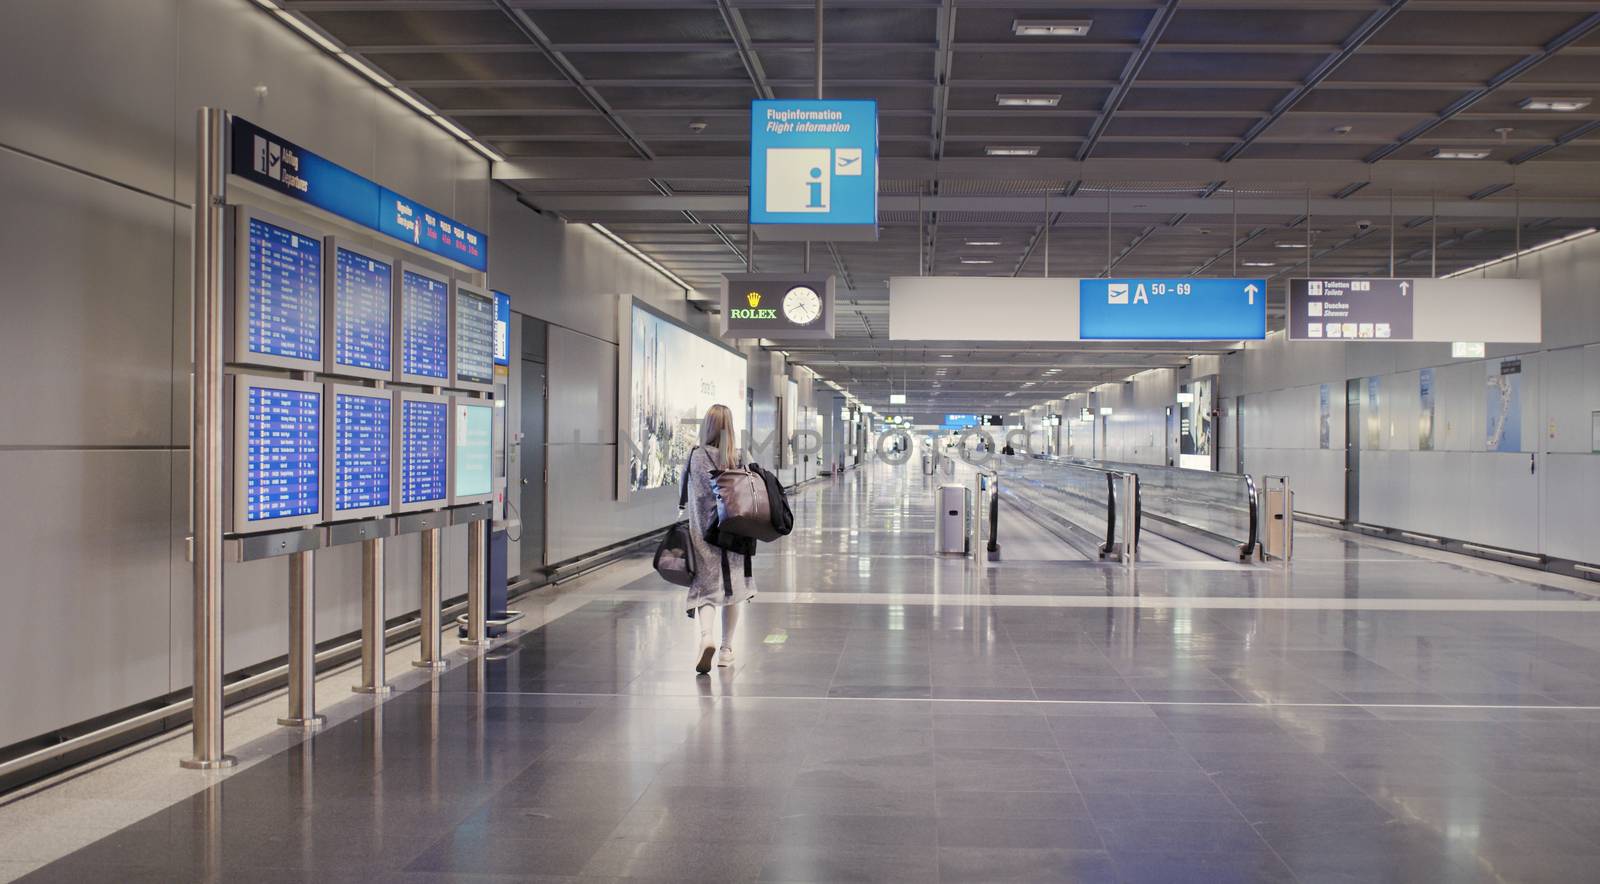 Frankfurt Airport During Covid Times by haraujo